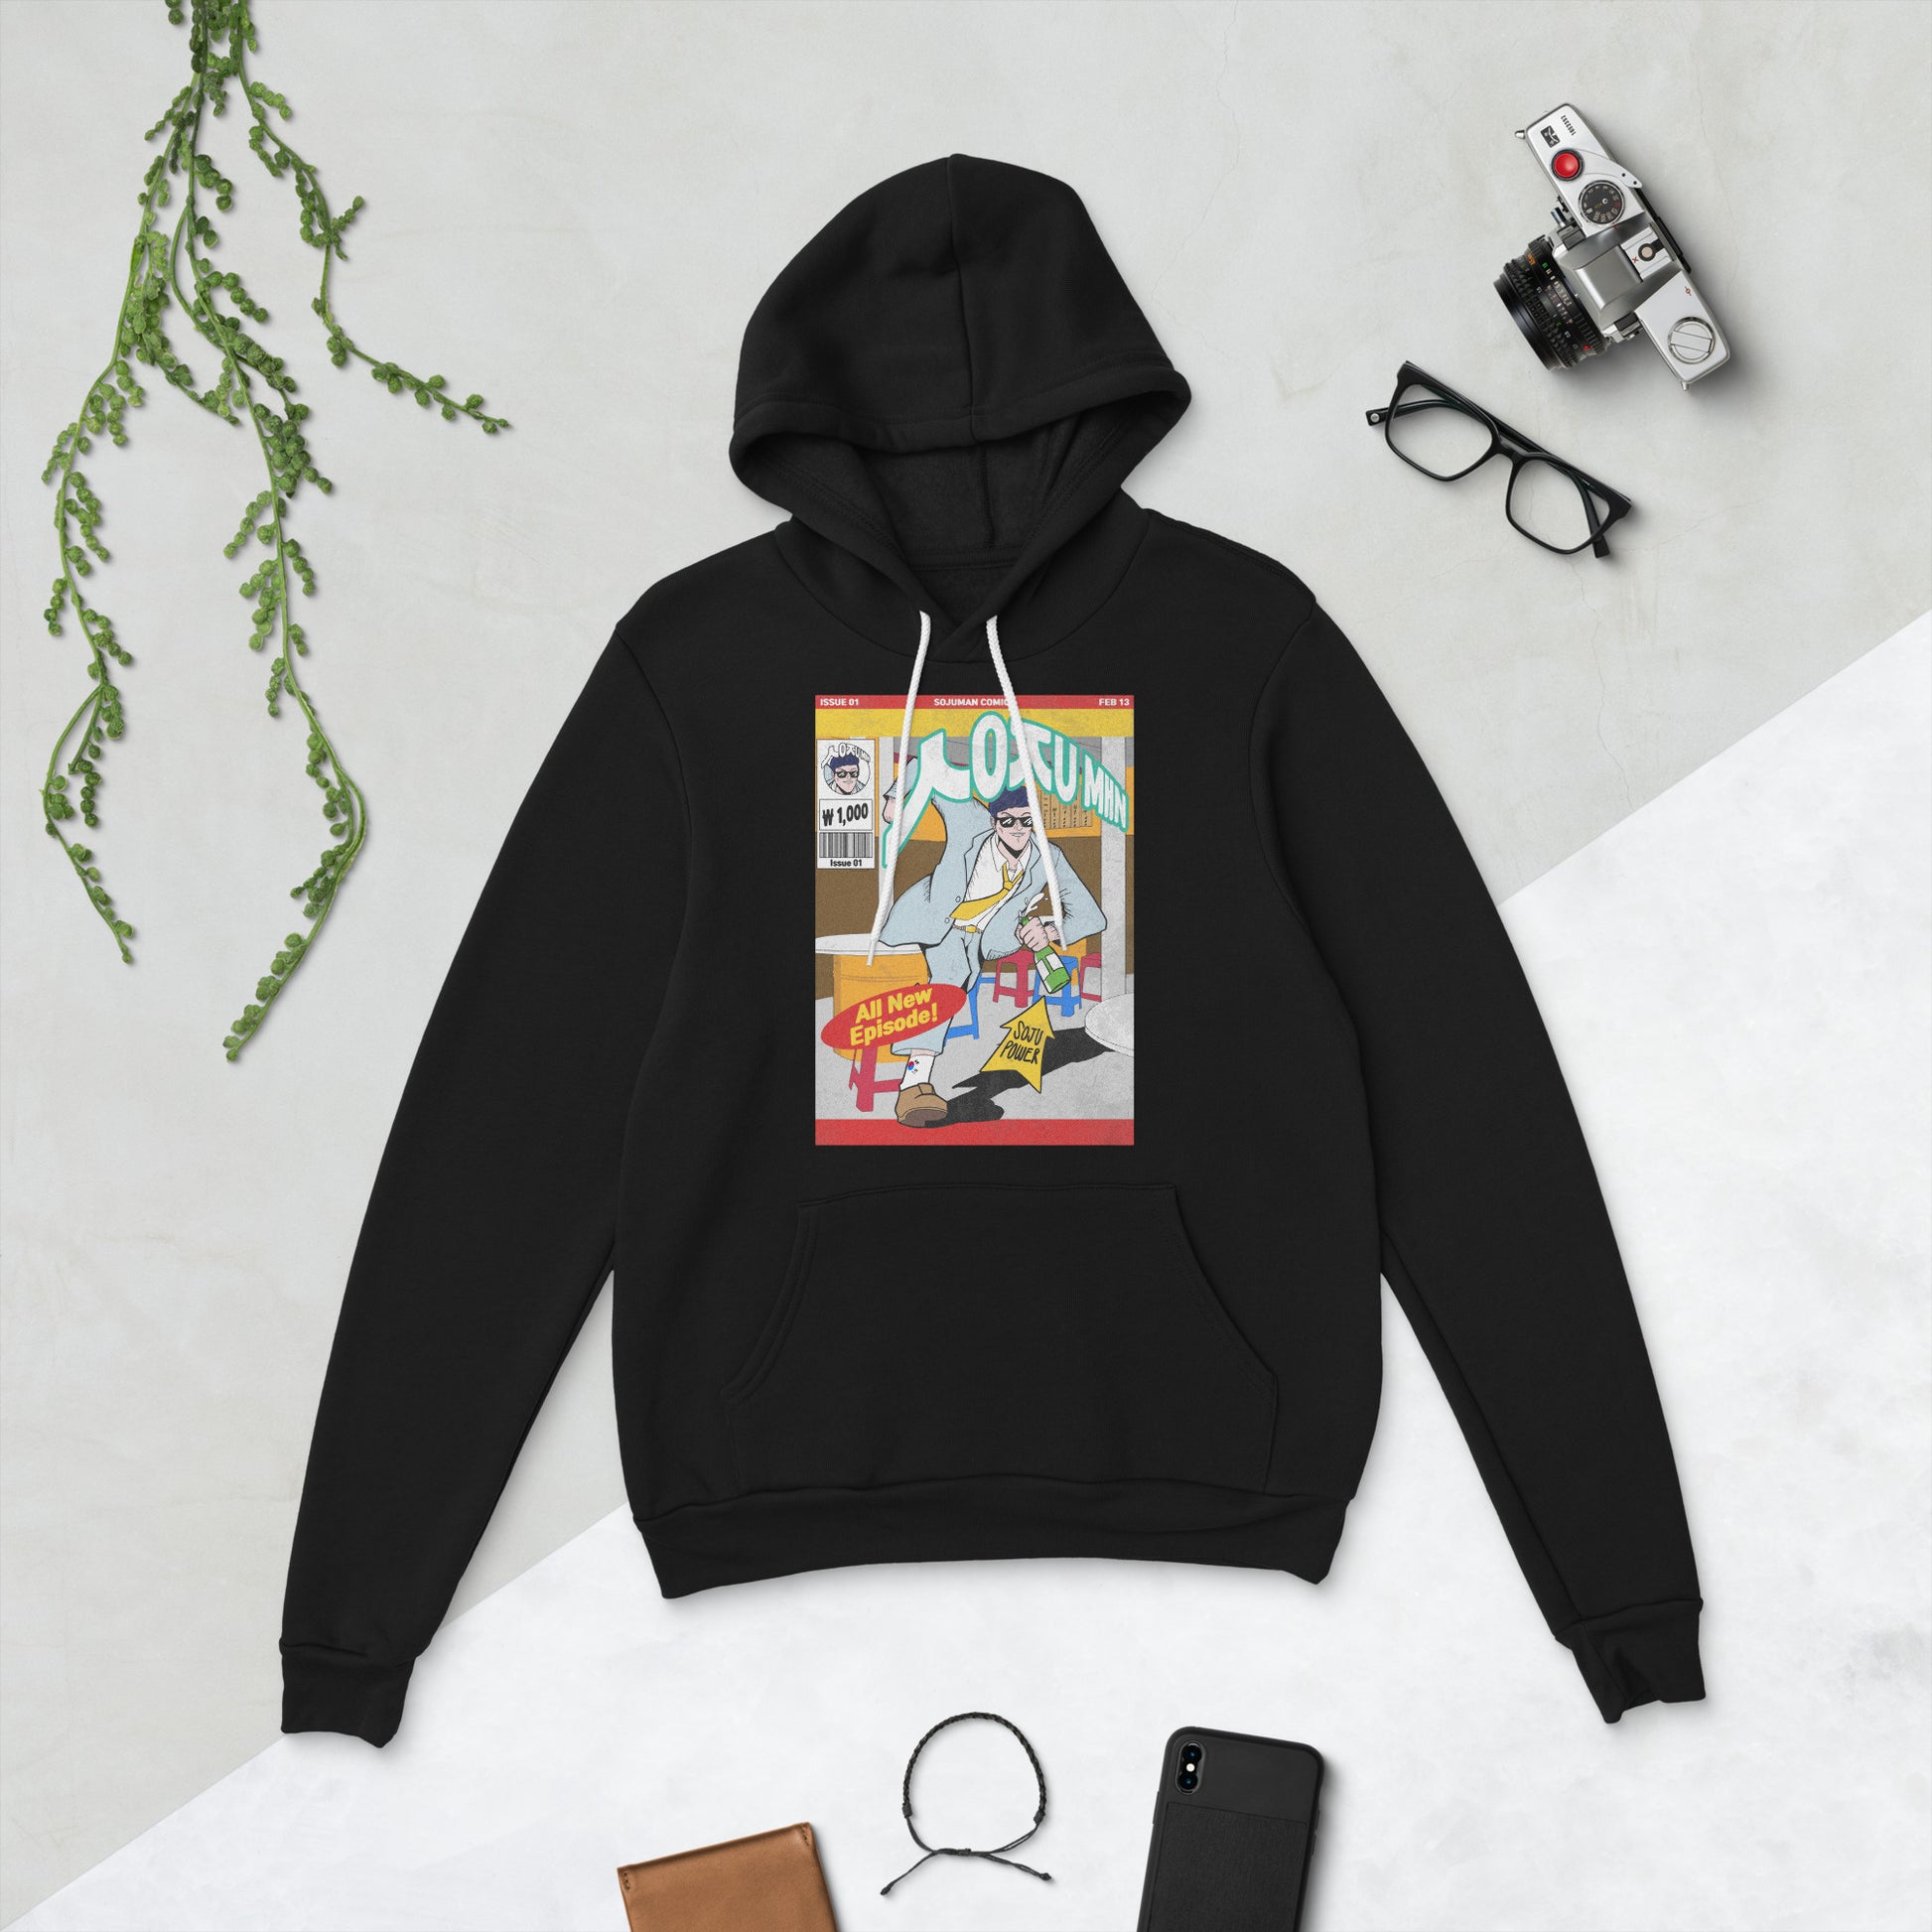 Black Korean fashion hoodie for men and women with superhero design